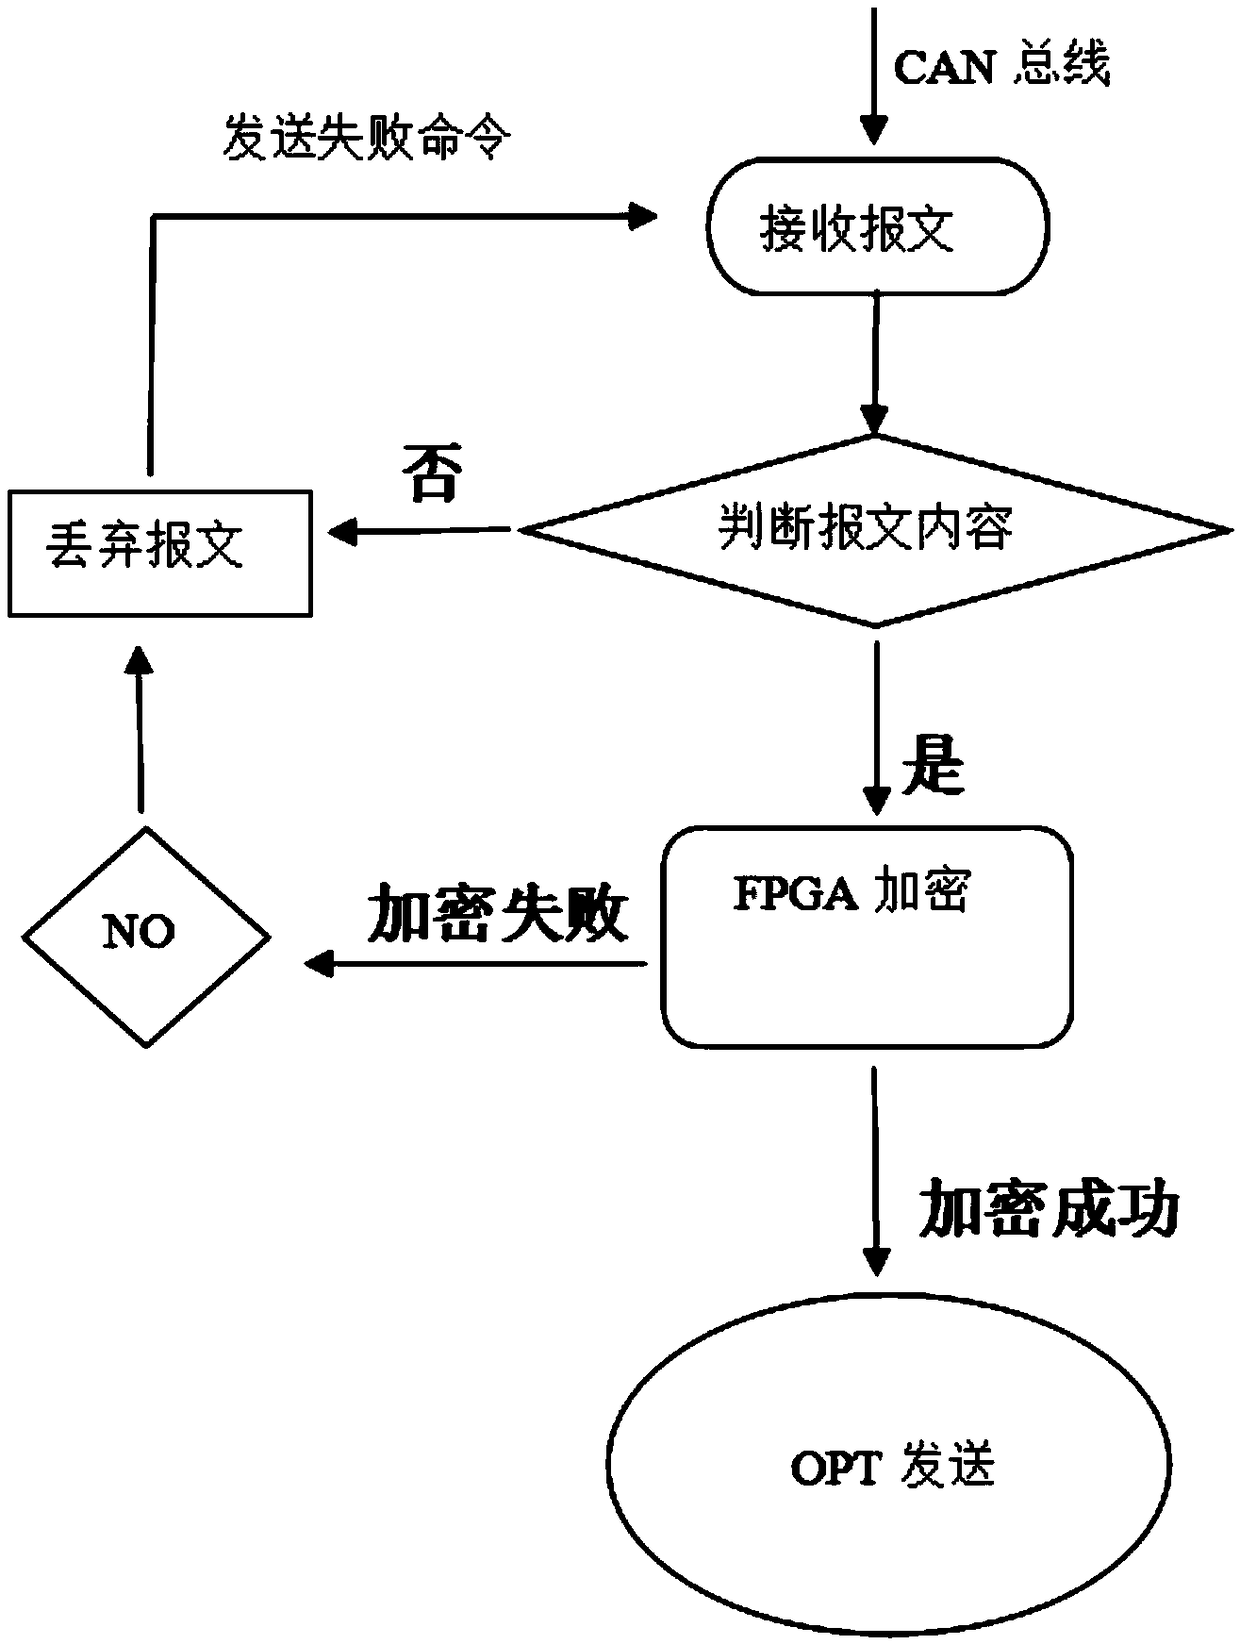 A CAN industrial optical fiber encryption converter and its FPGA encryption algorithm implementation method